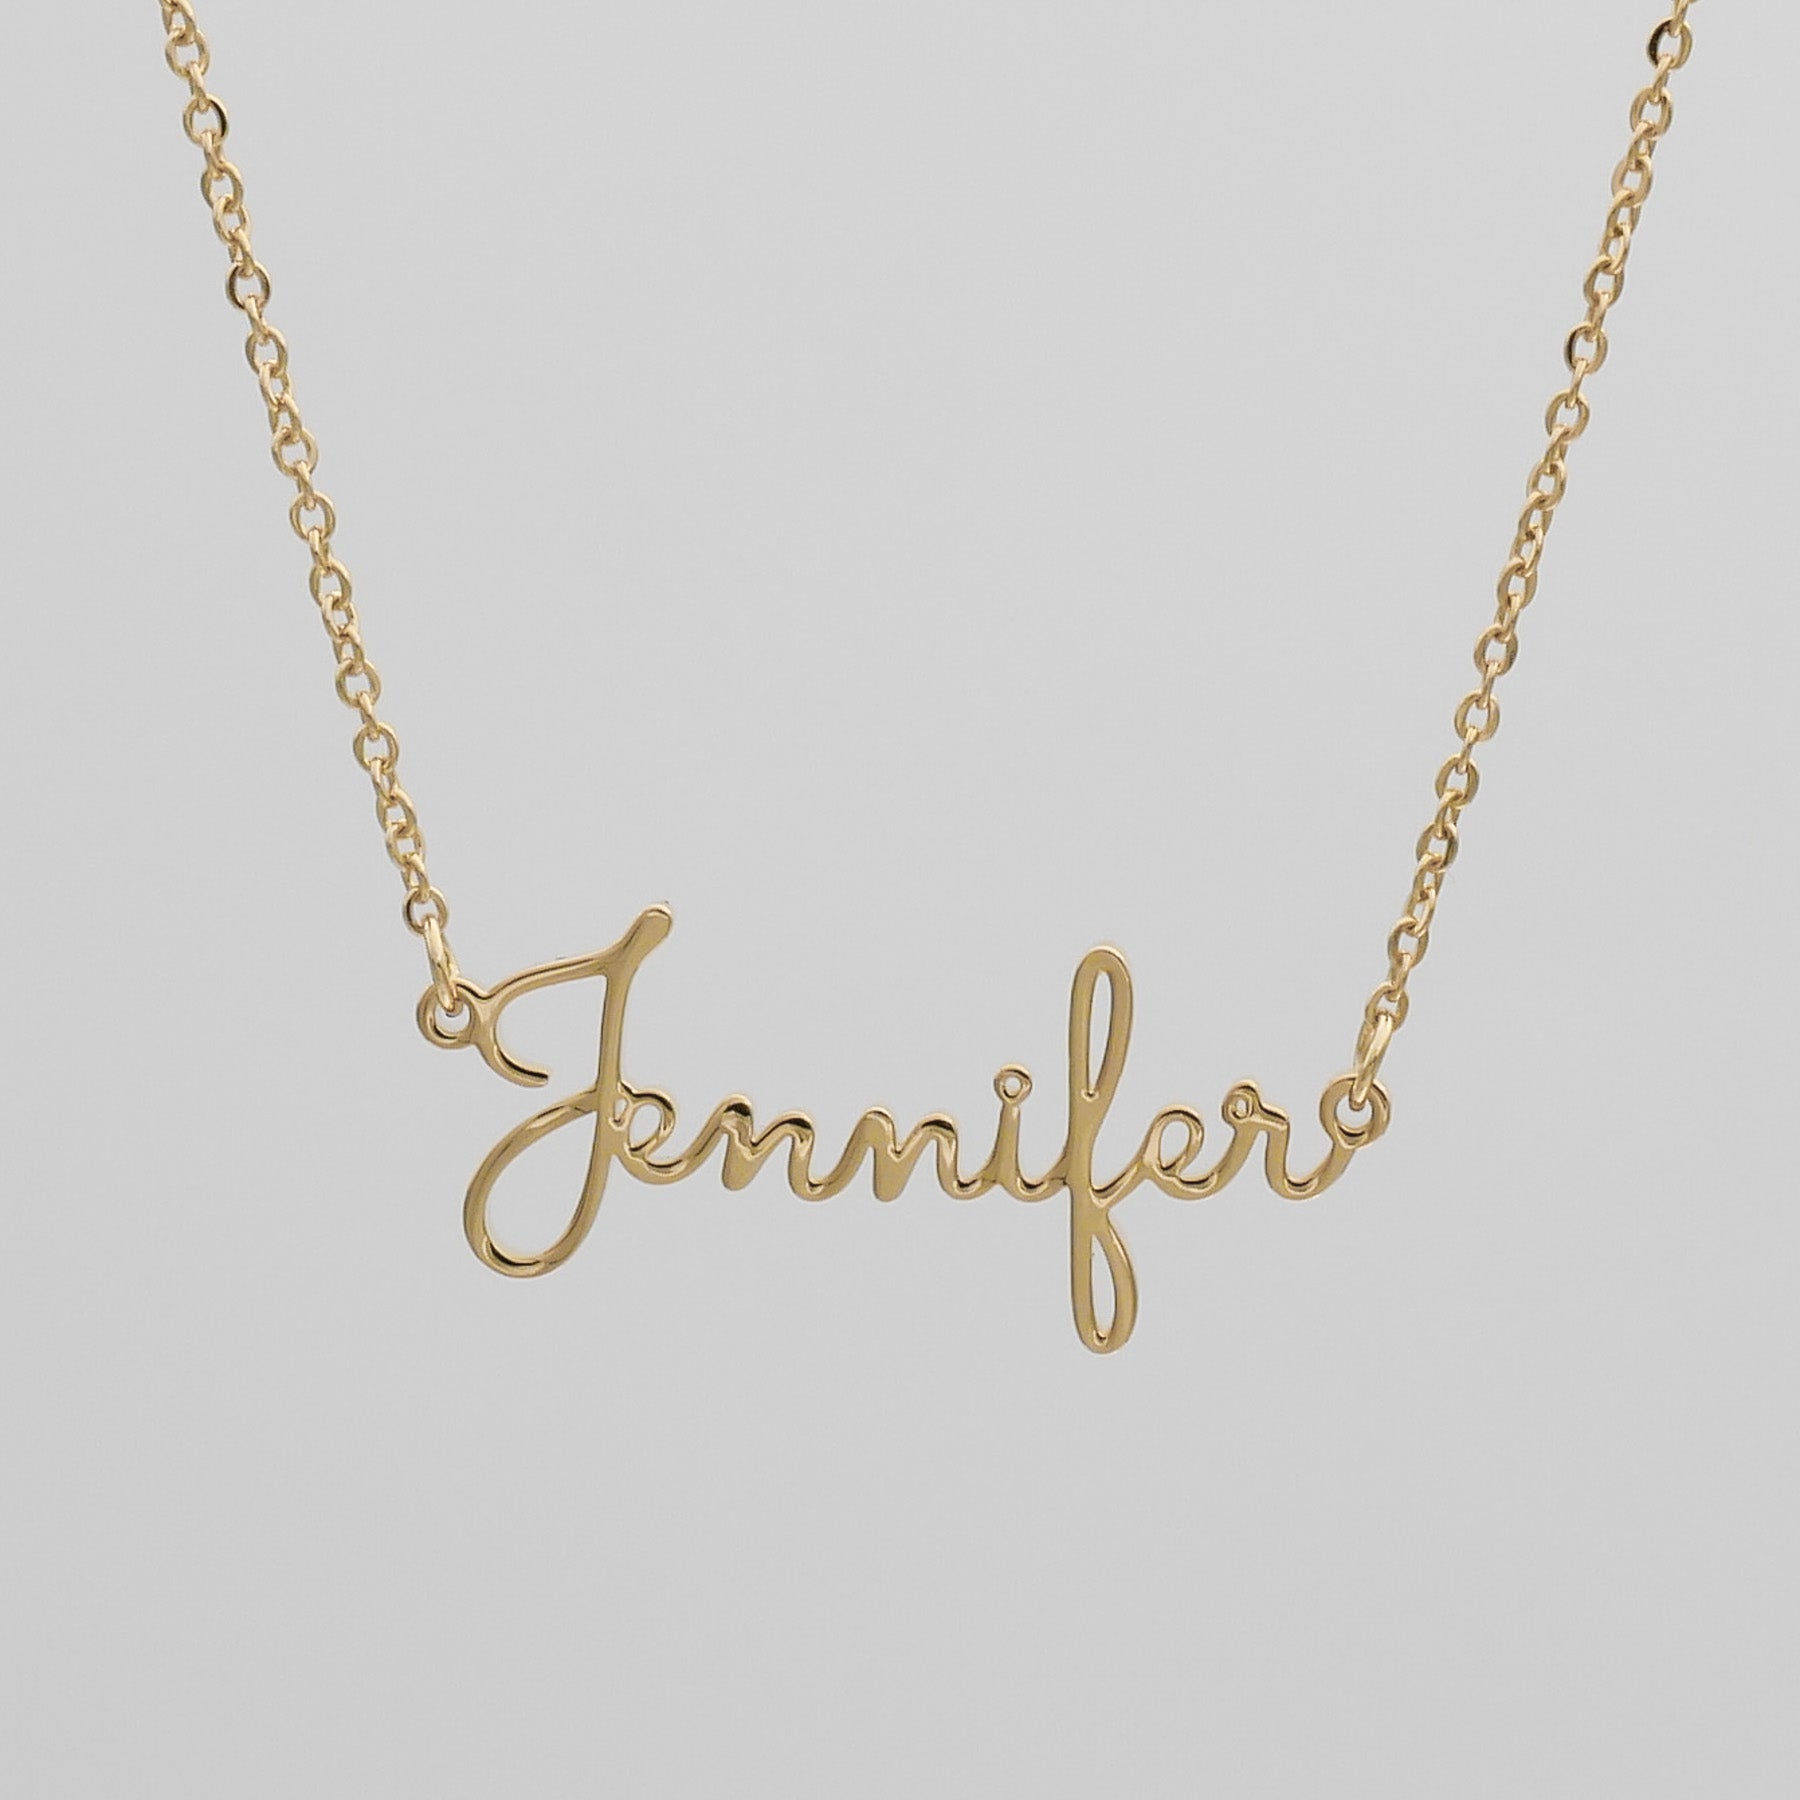 Gold London name necklace that says Jennifer 